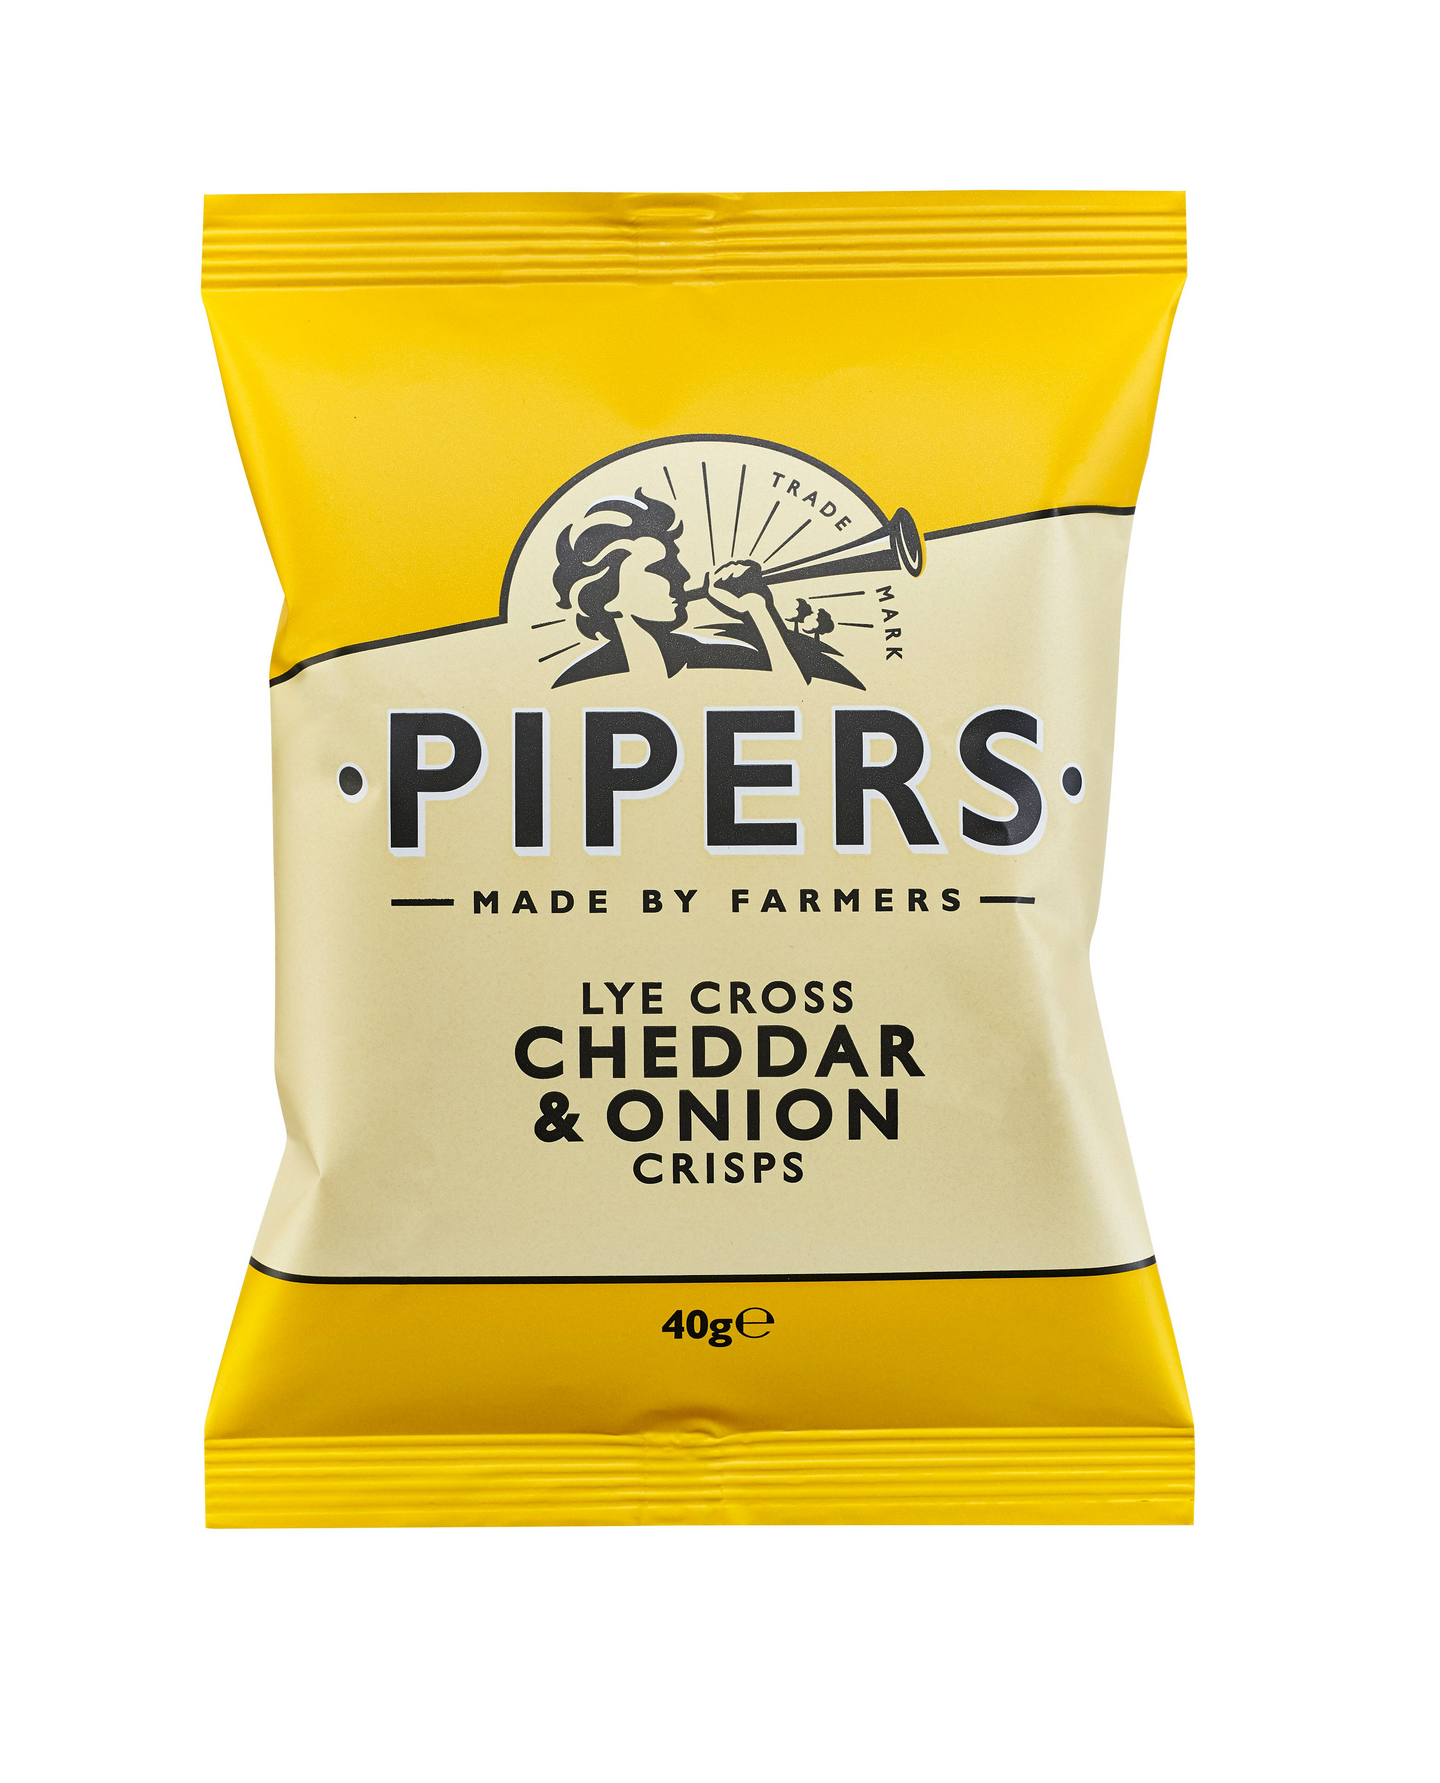 Pipers Crisp Lye Cross Cheddar & Onion 40 g